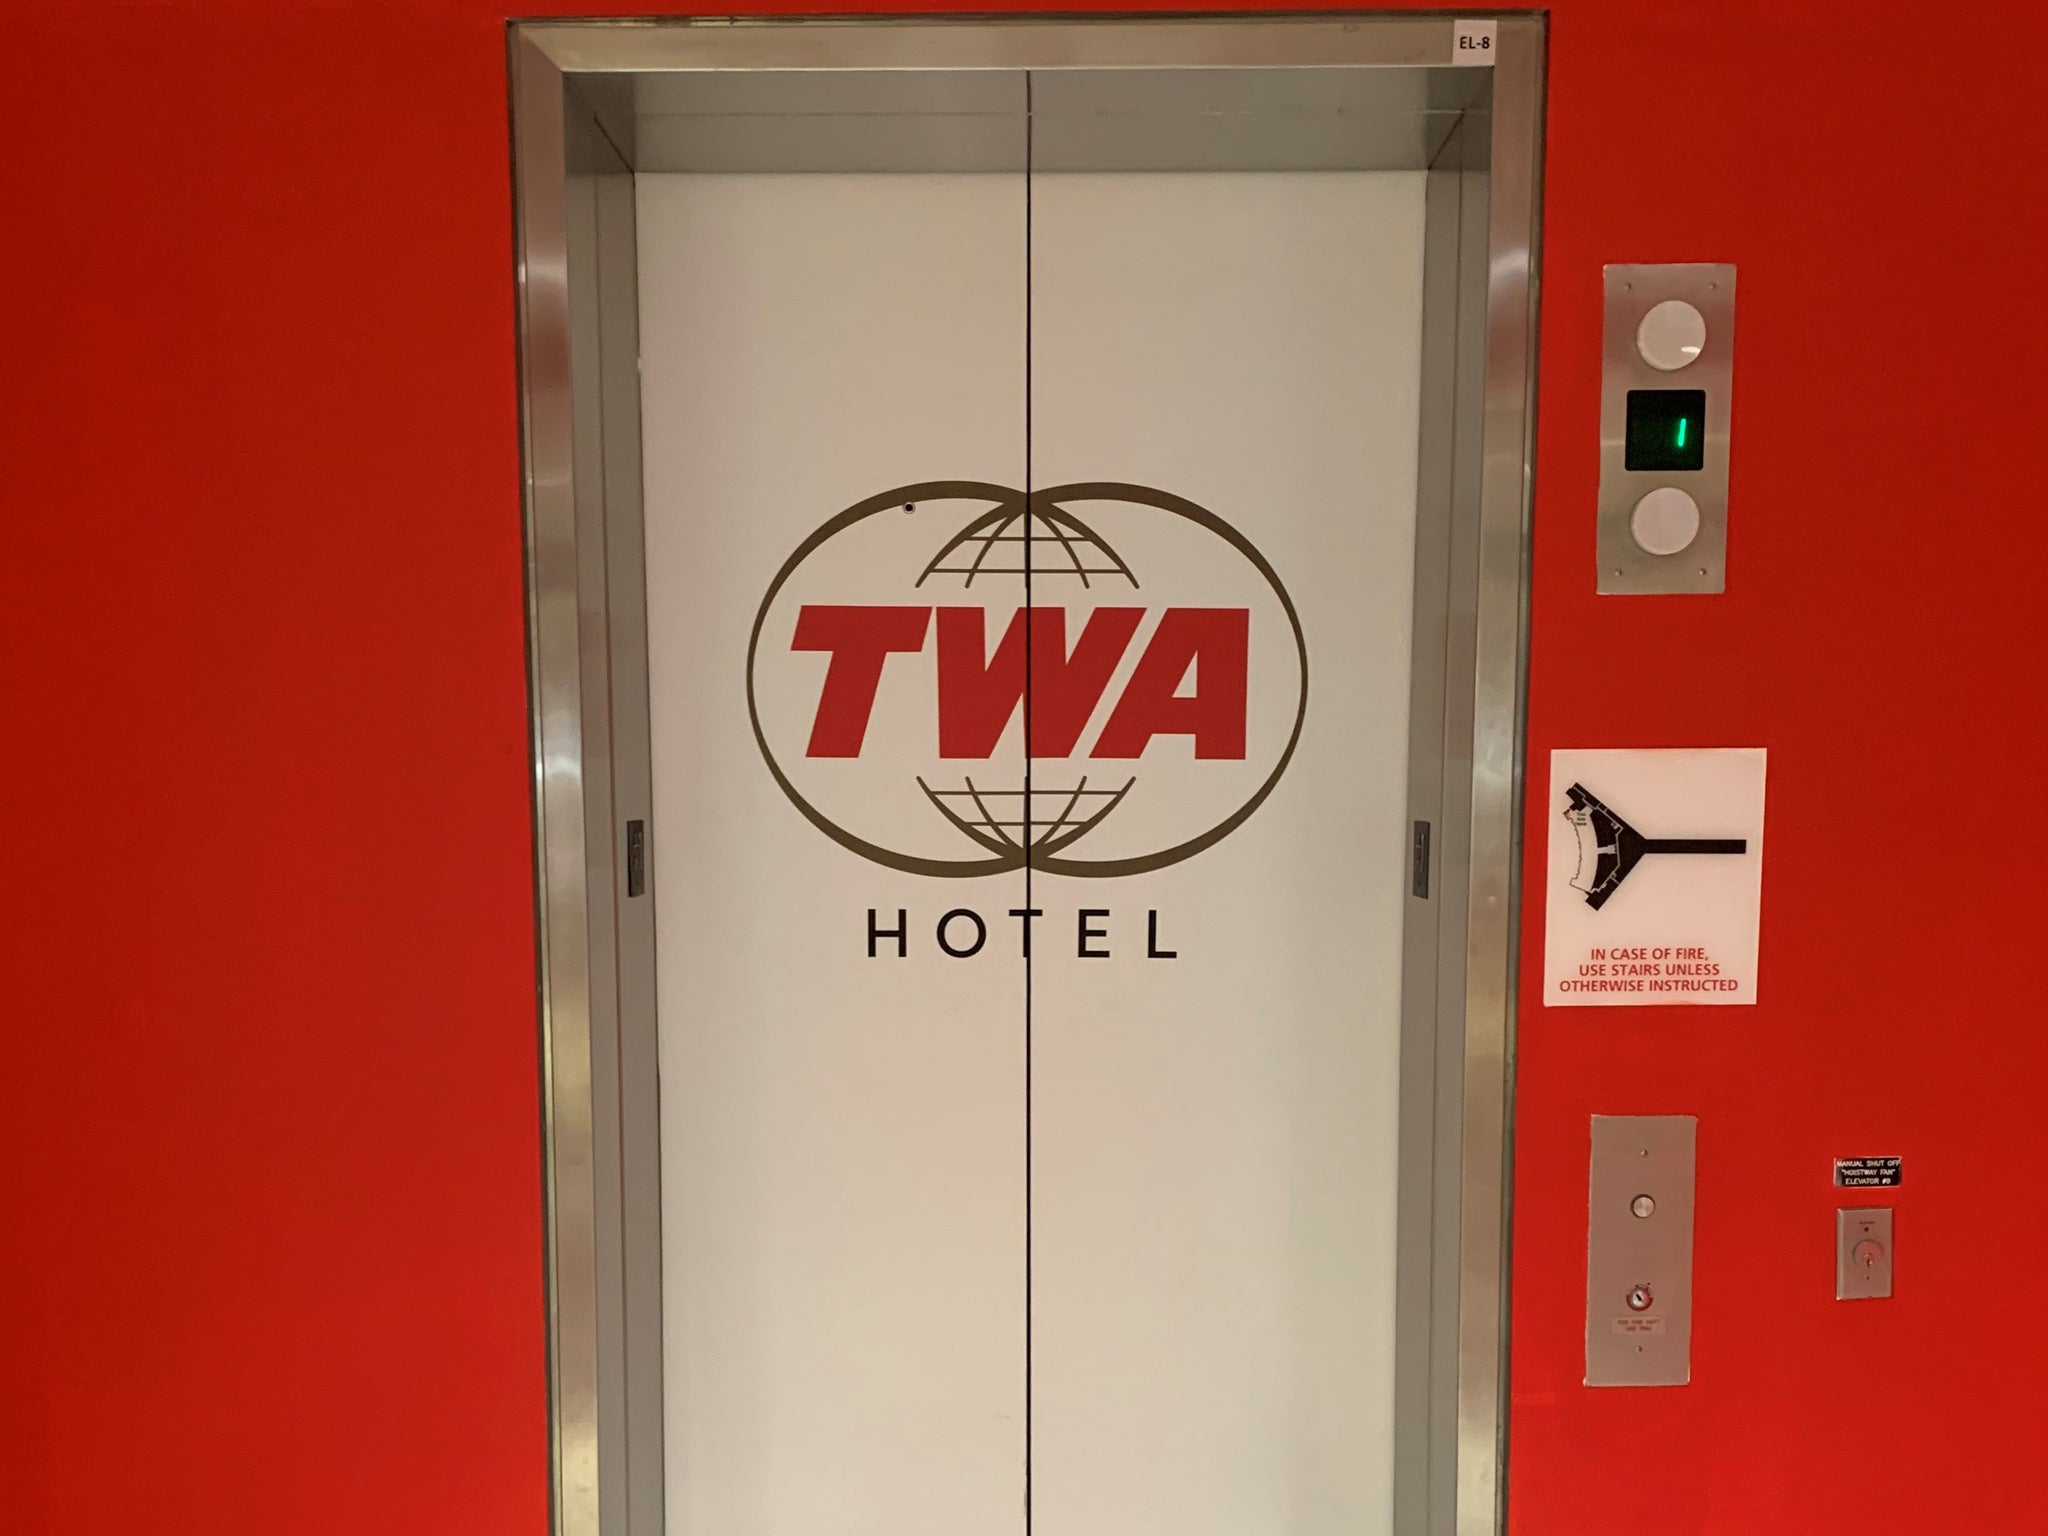 TWA Hotel Elevator